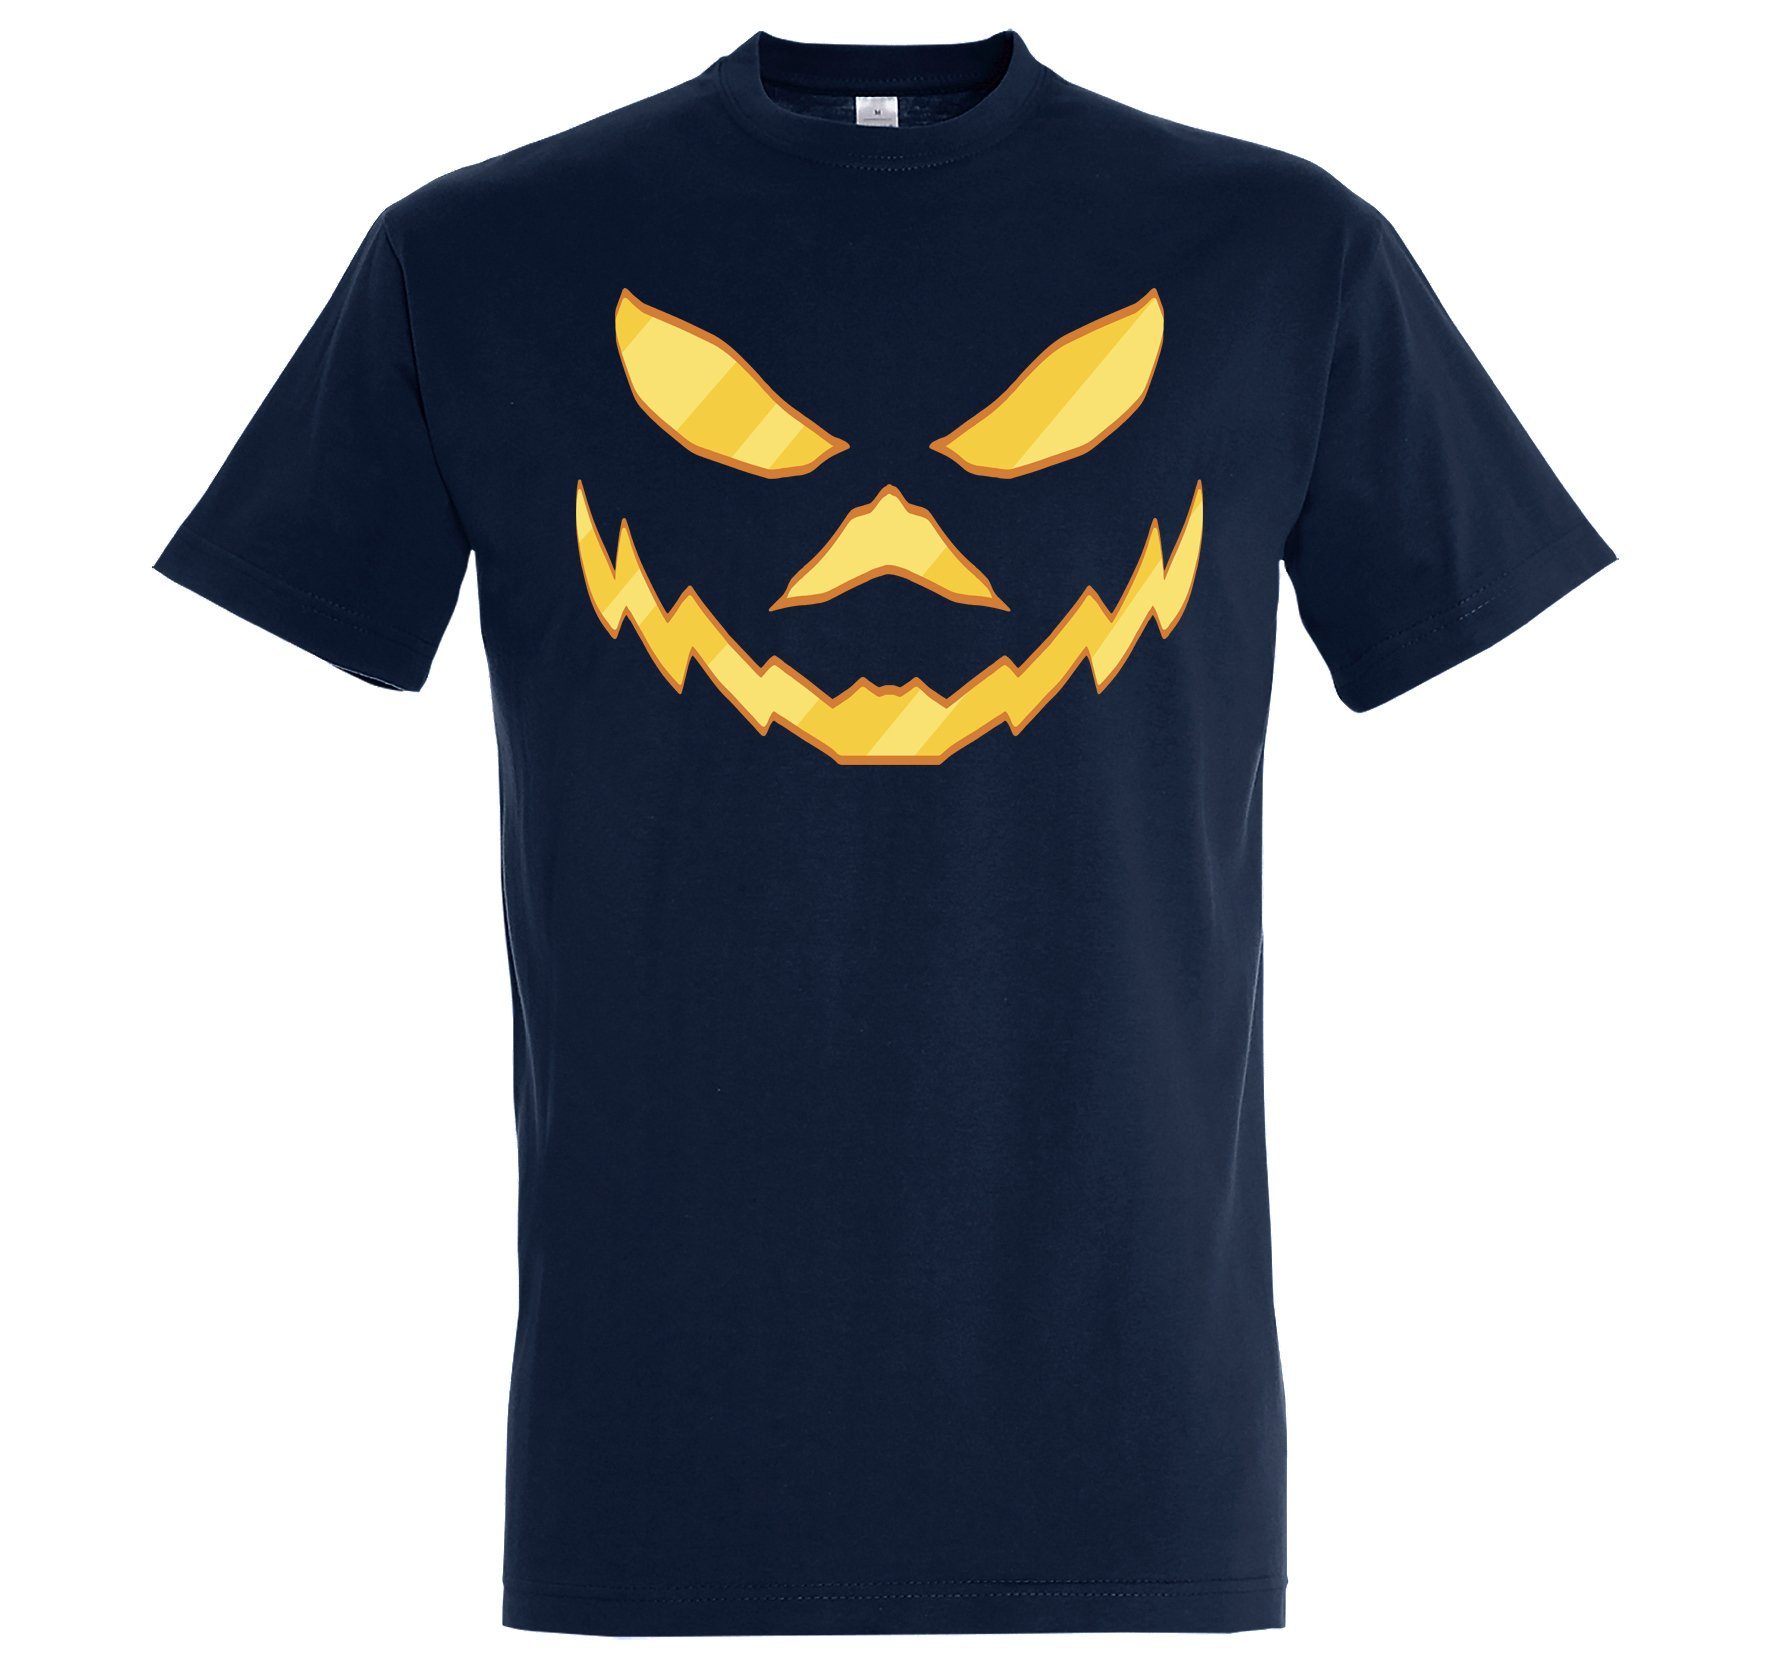 Youth Designz Print-Shirt Halloween Herren T-Shirt Horror Joker Face Fun-Look mit modischem Print Aufdruck Navyblau